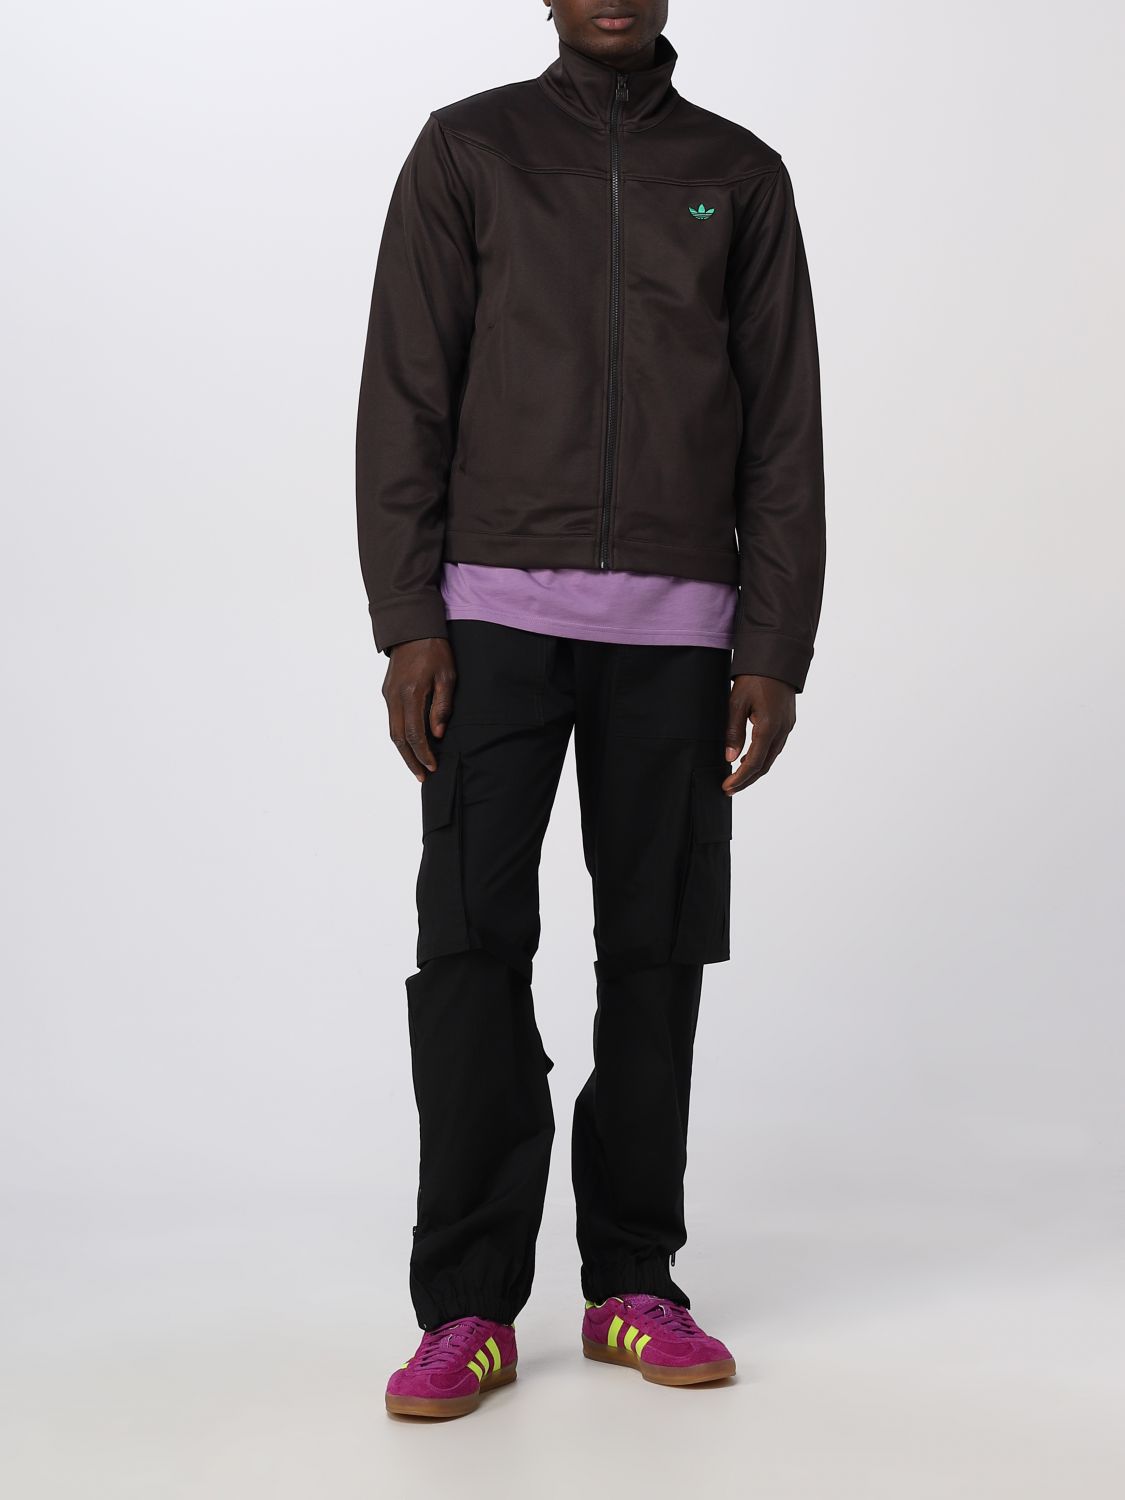 ADIDAS ORIGINALS BY WALES BONNER: jacket for man - Brown | Adidas ...